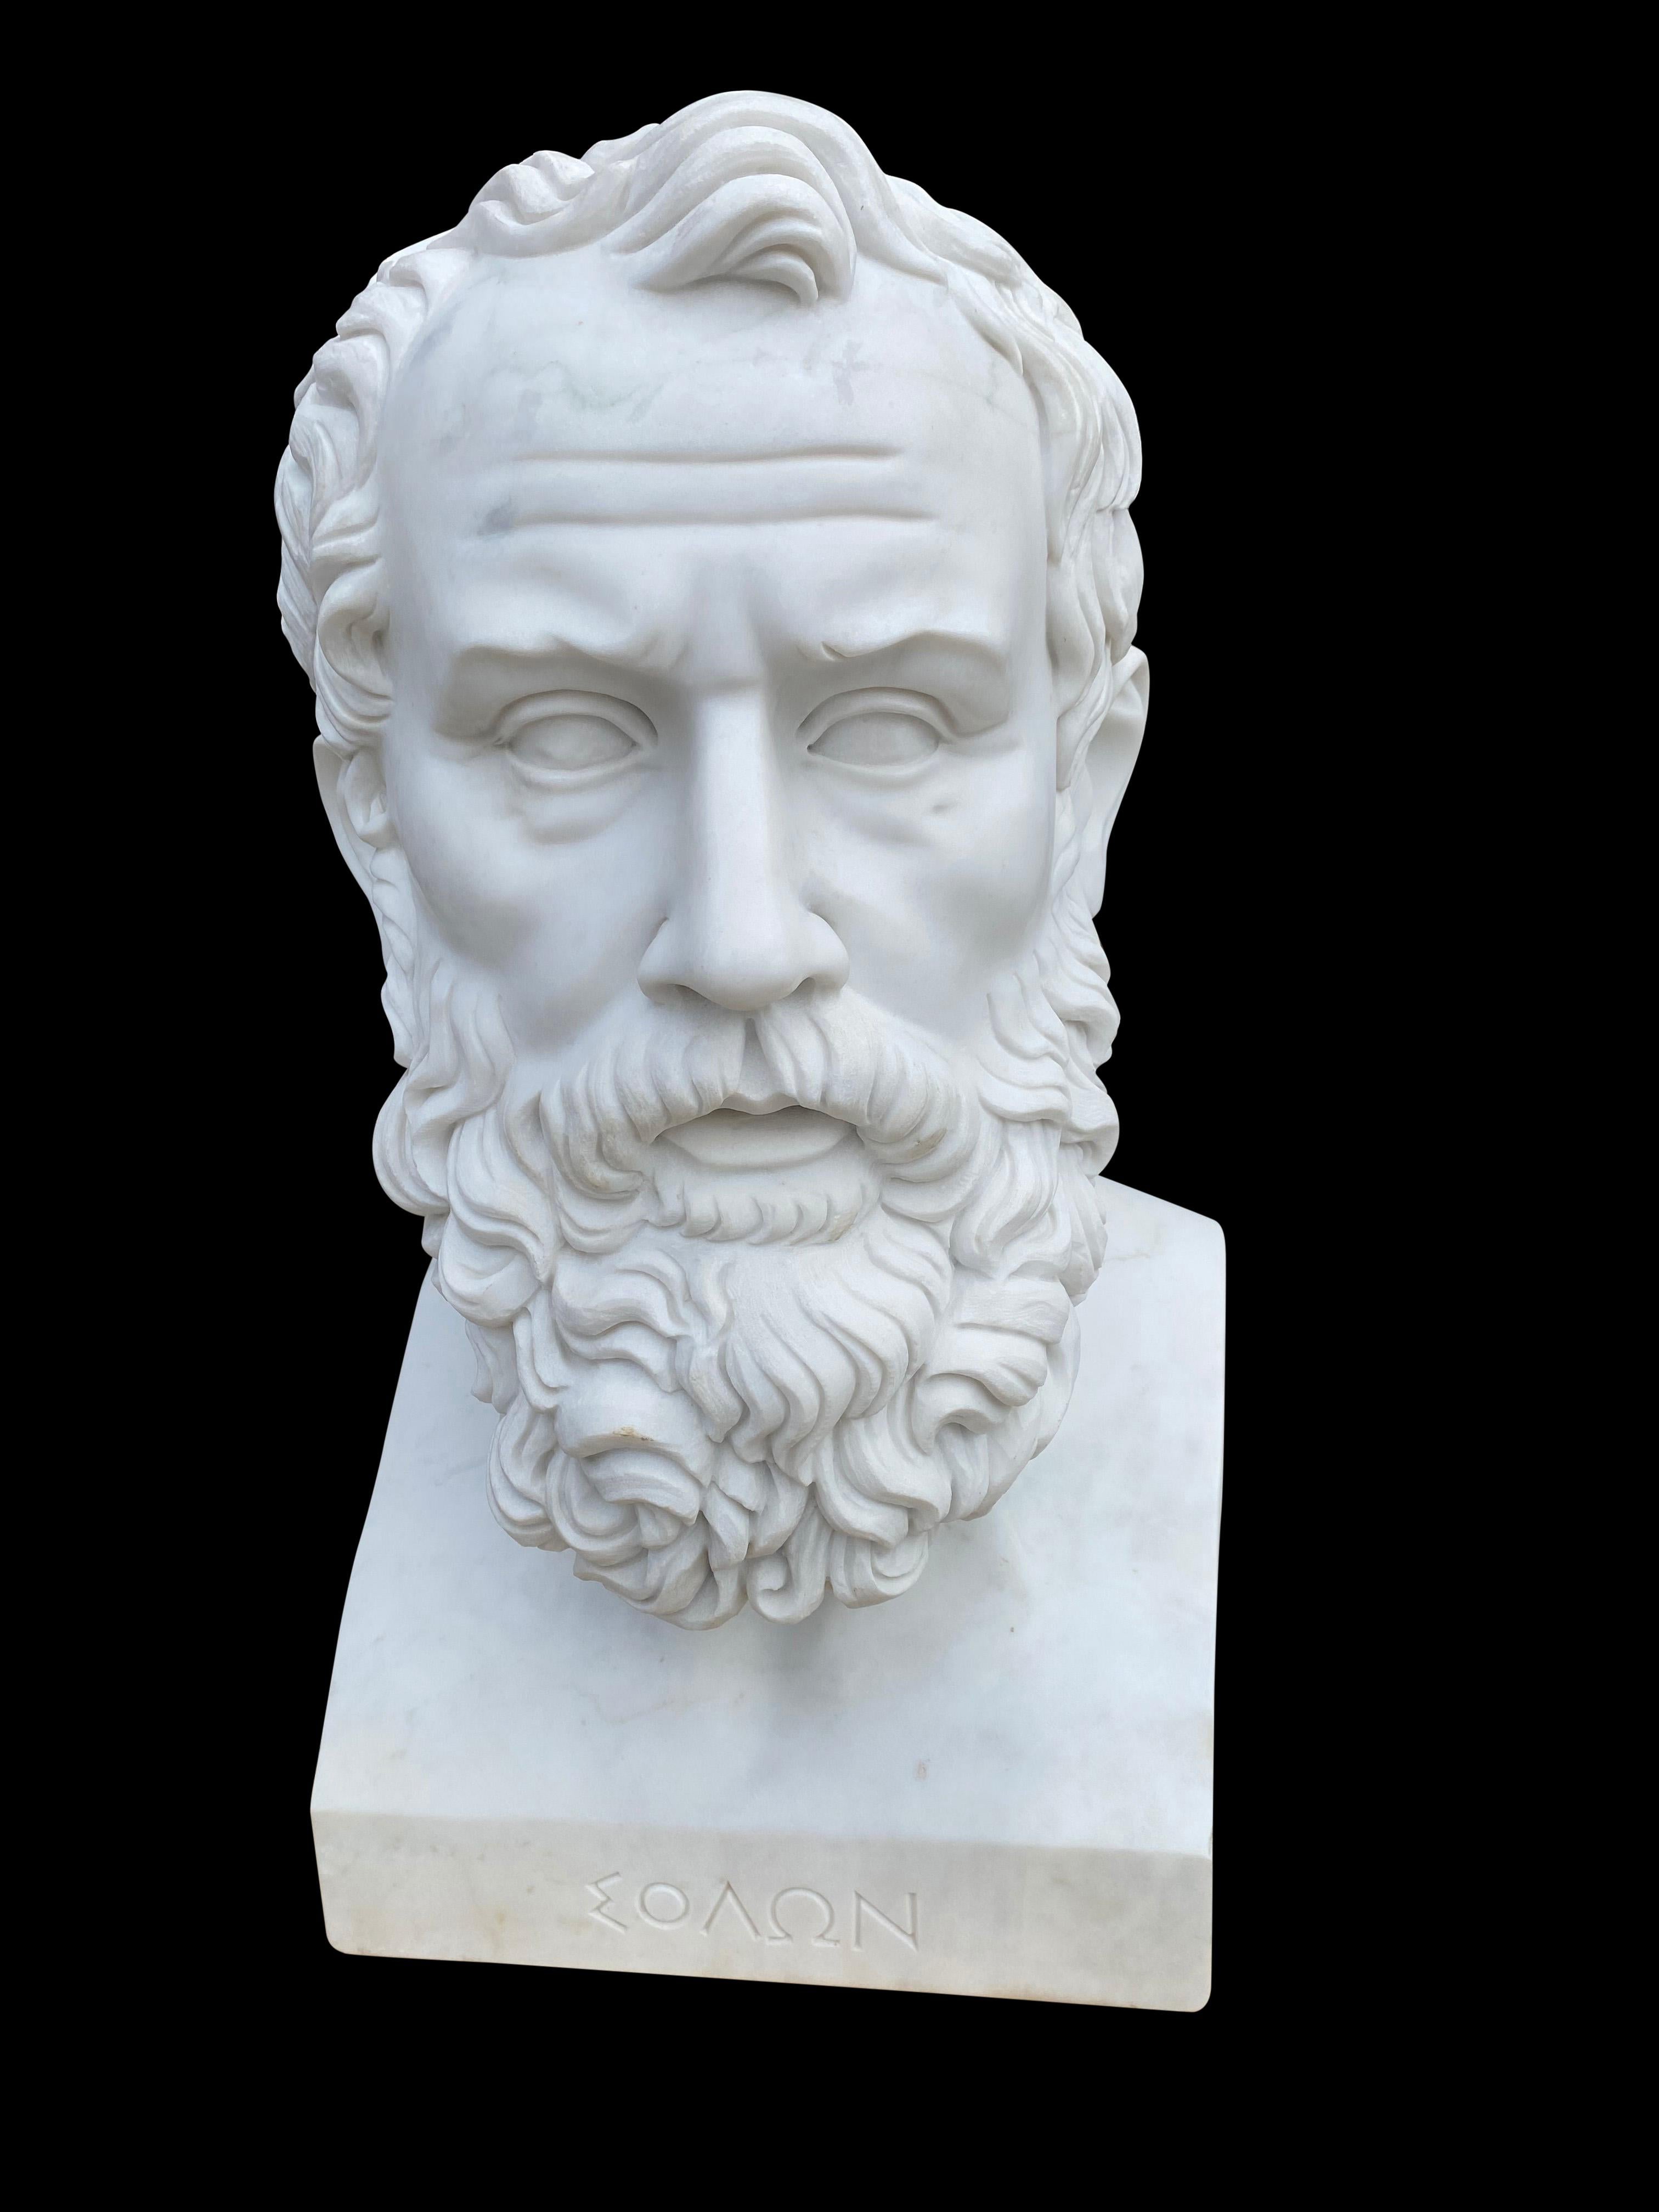 Solon sculpture Ancient Greek statesman lawmaker and poet great statue 